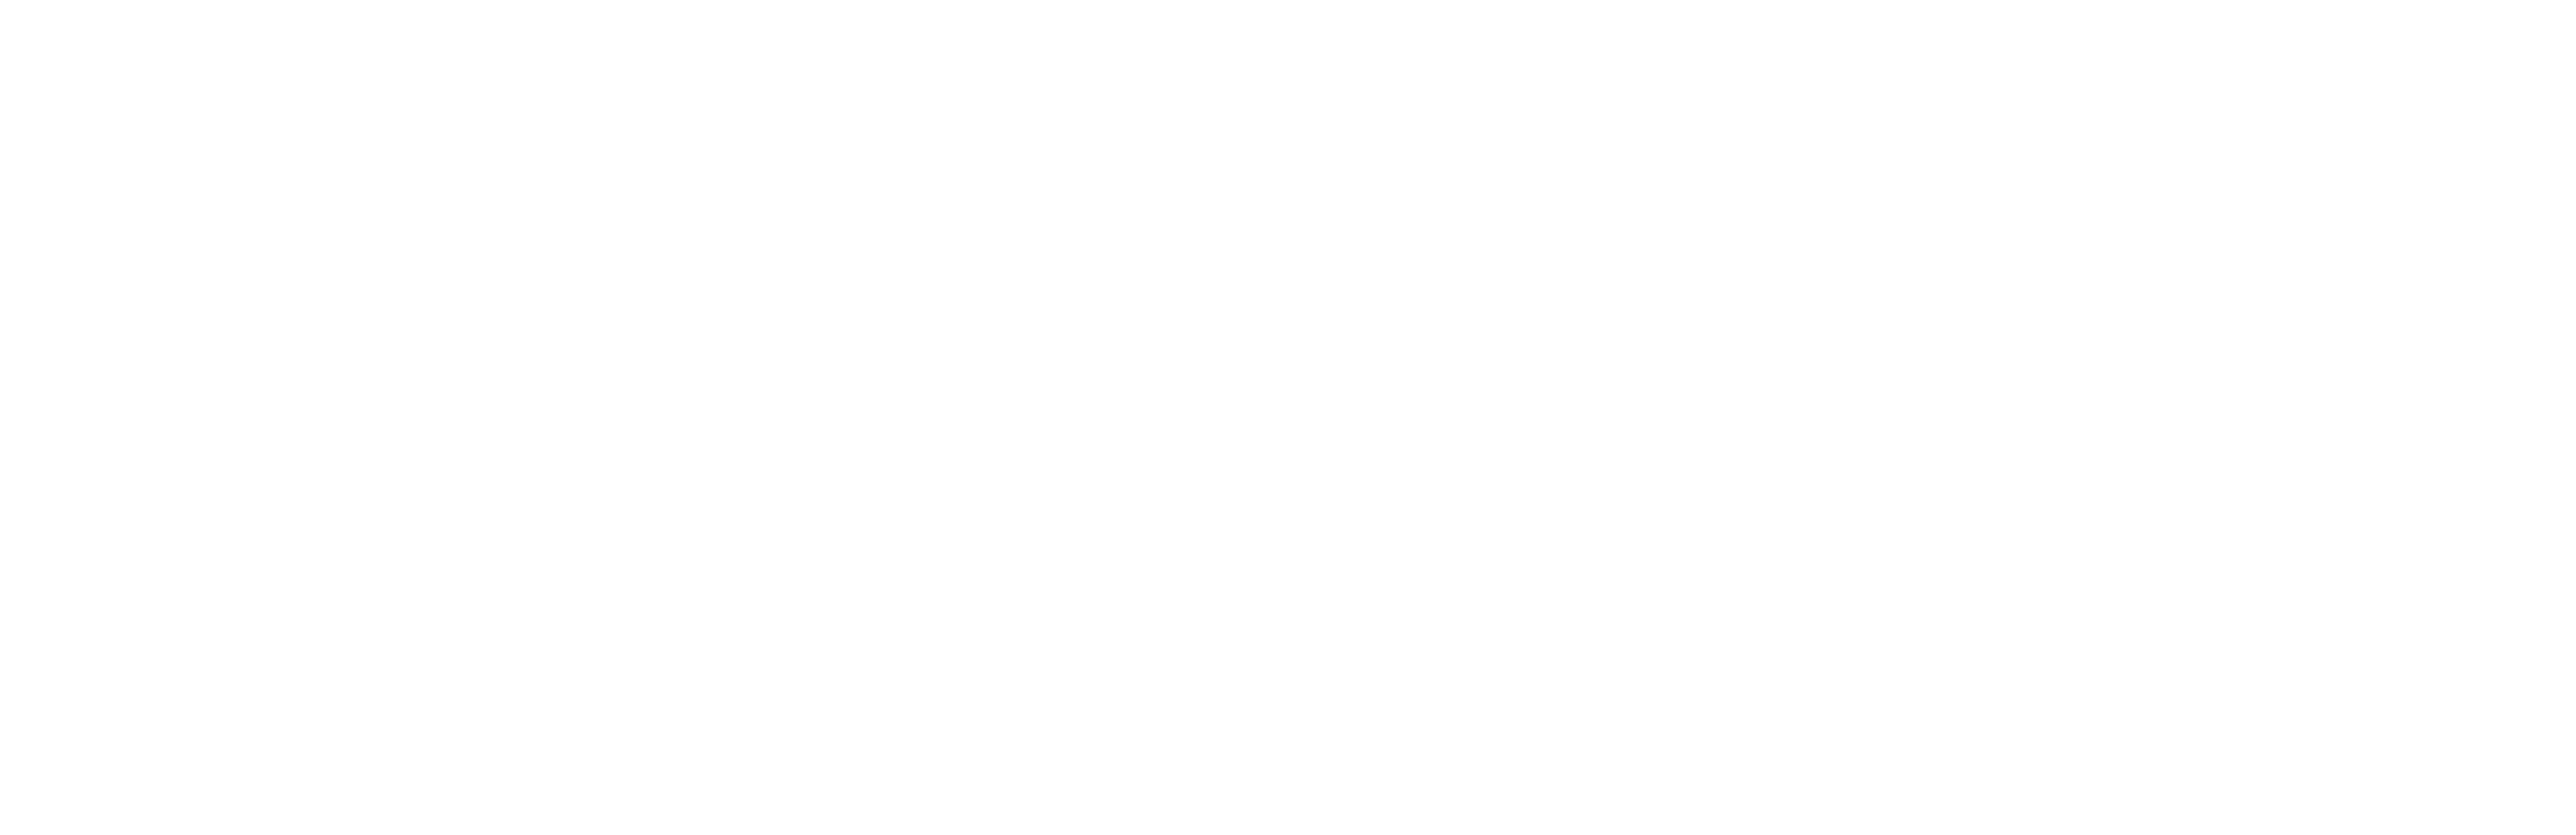 zgood Way Gardens ornamented logo